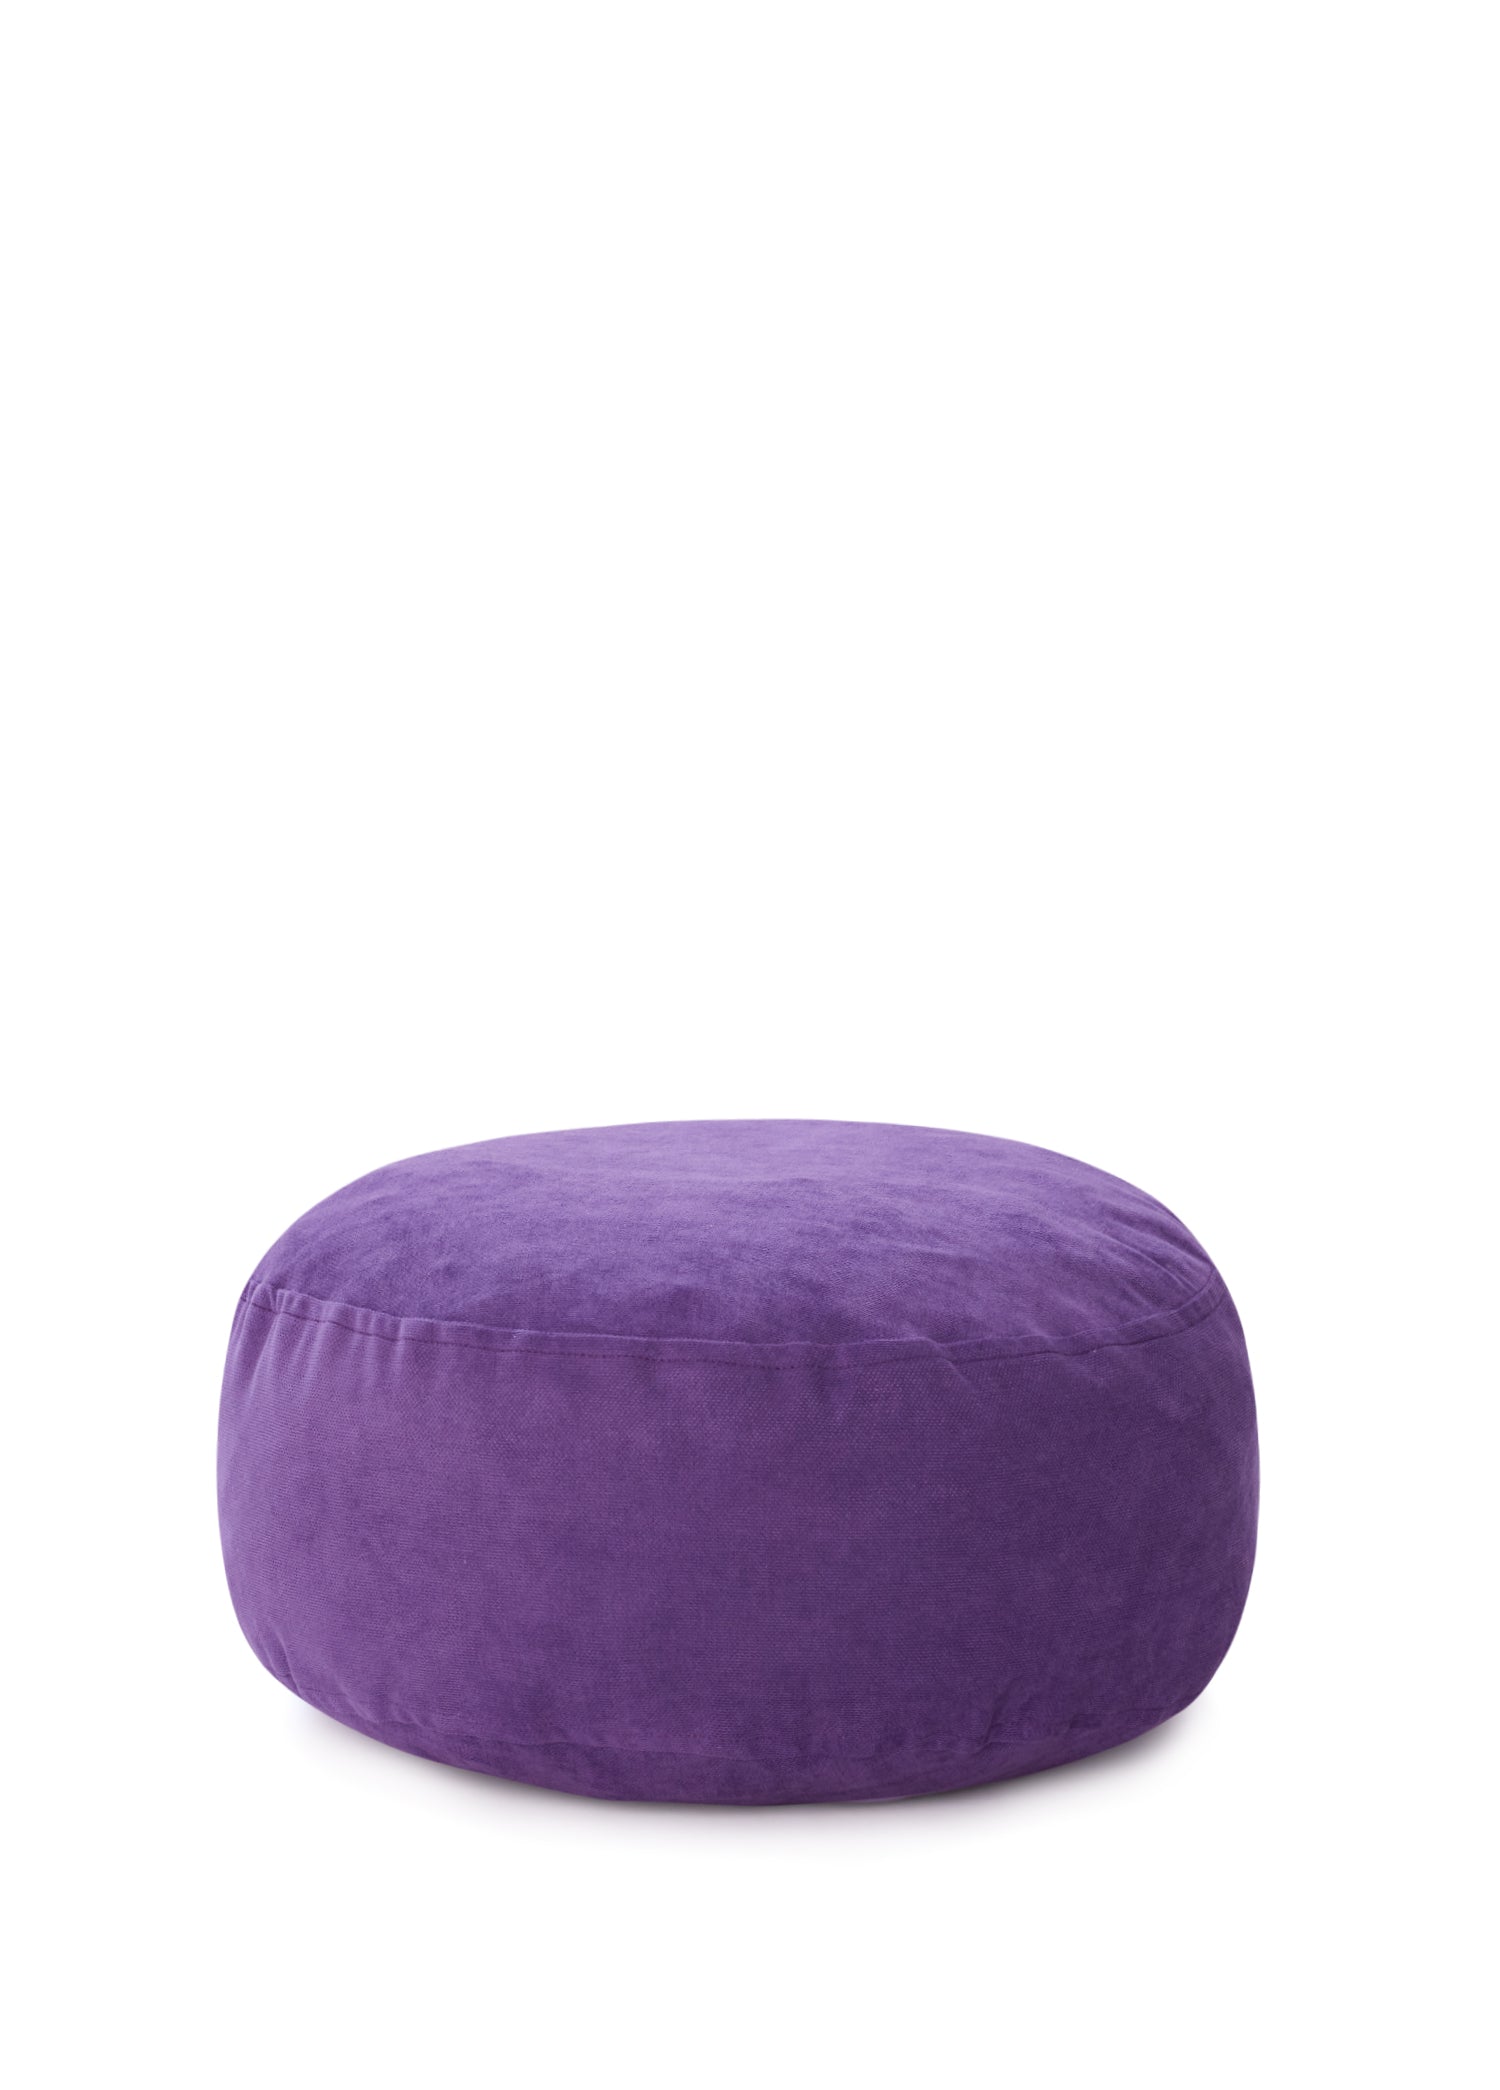 Purple Meditation Cushion 33 Cm Diameter